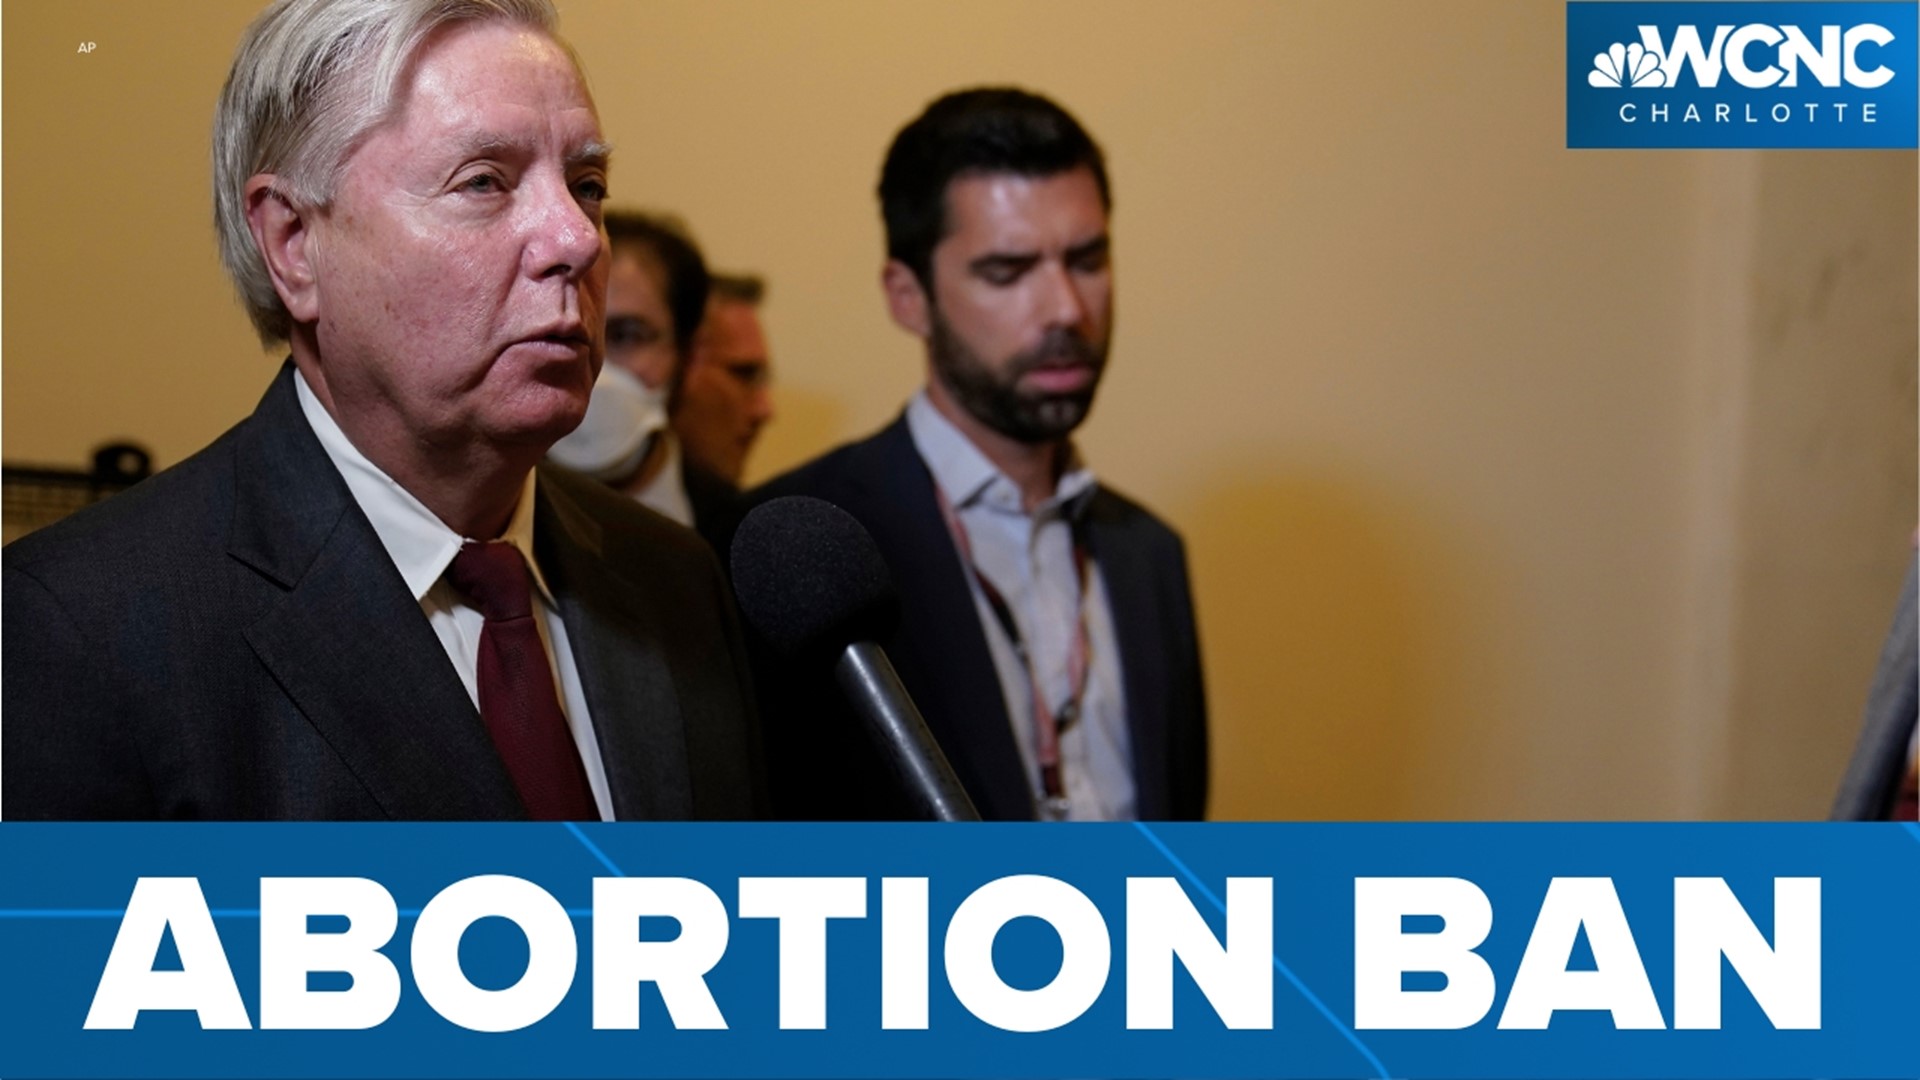 President Biden blasts Senator Graham on proposed abortion ban.